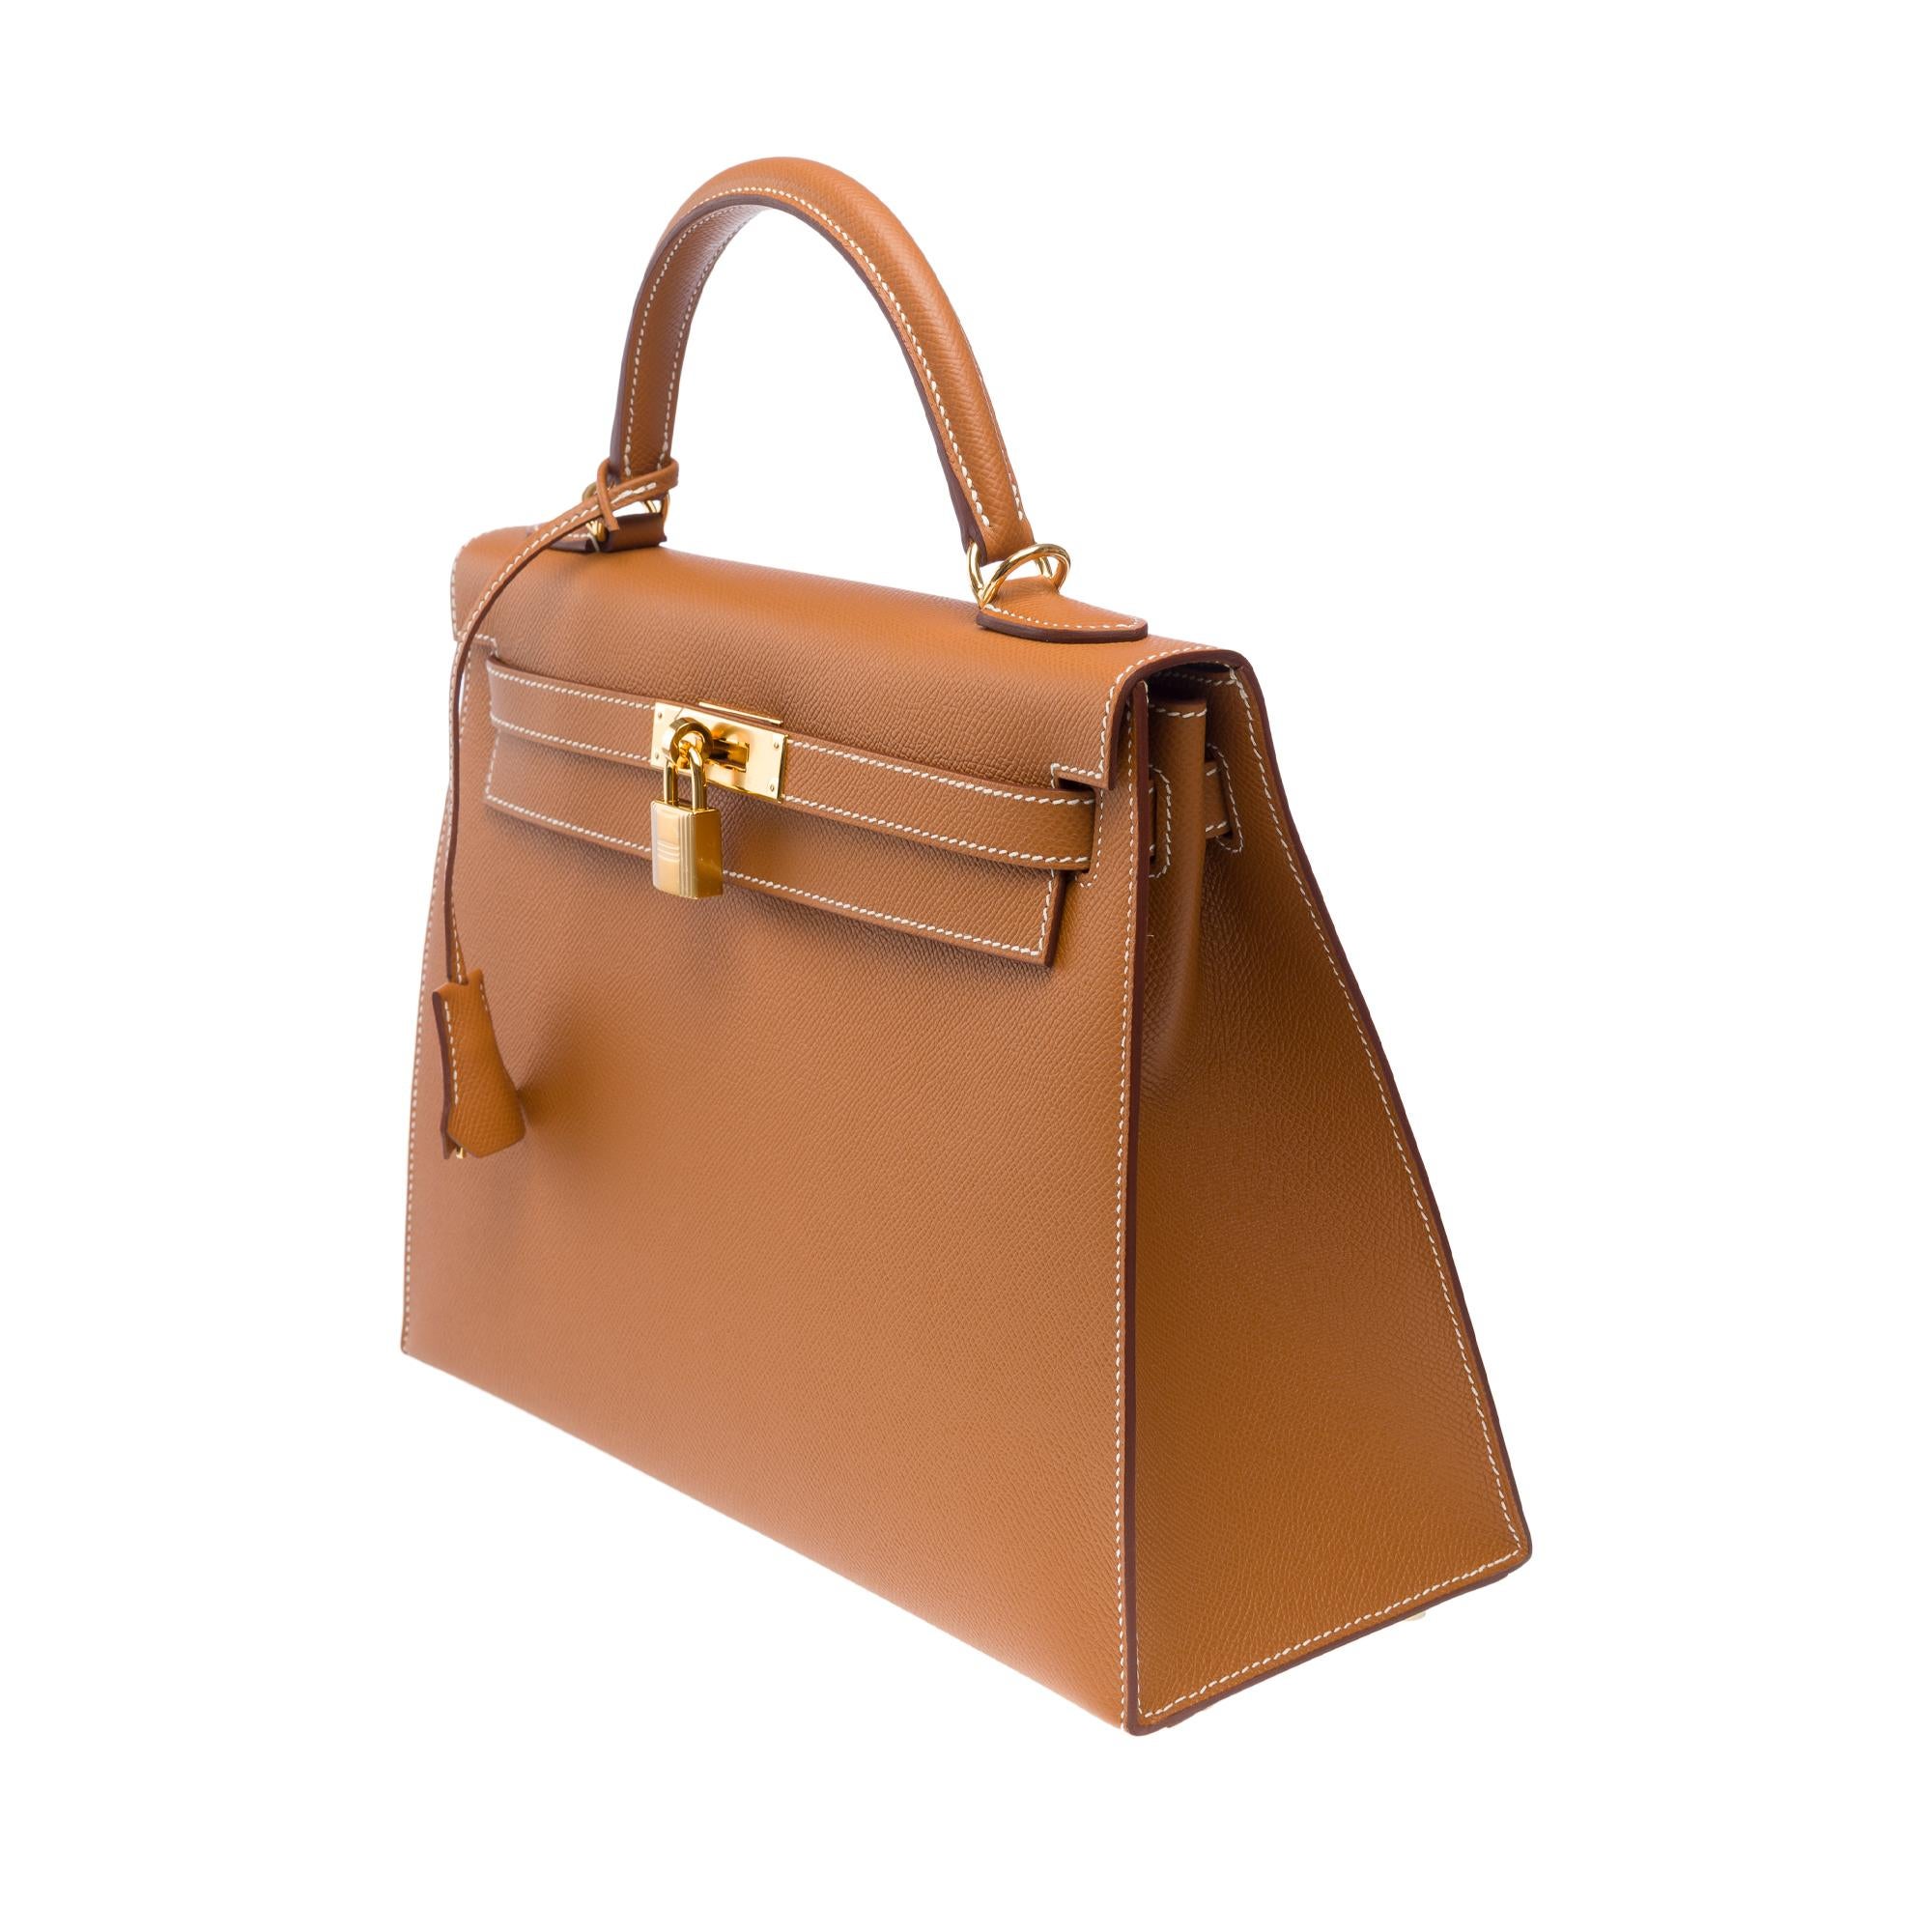 New Hermès Kelly 32 sellier handbag strap in Camel Epsom calf leather, GHW For Sale 1